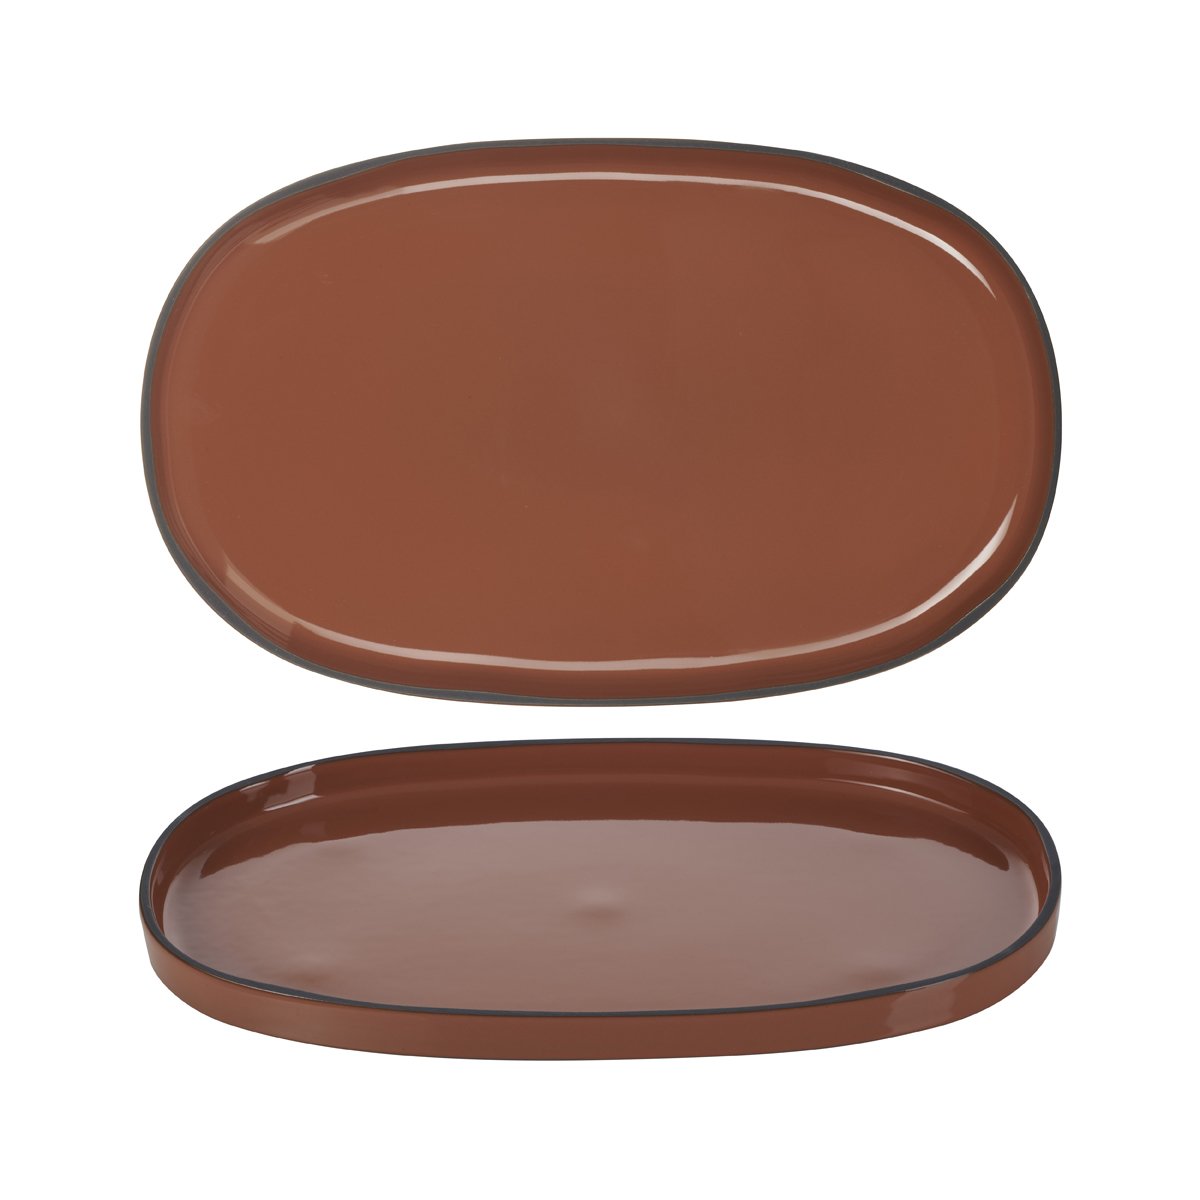 RV652761 Revol Caractere Cinnamon Oval Plate 355x218mm Tomkin Australia Hospitality Supplies